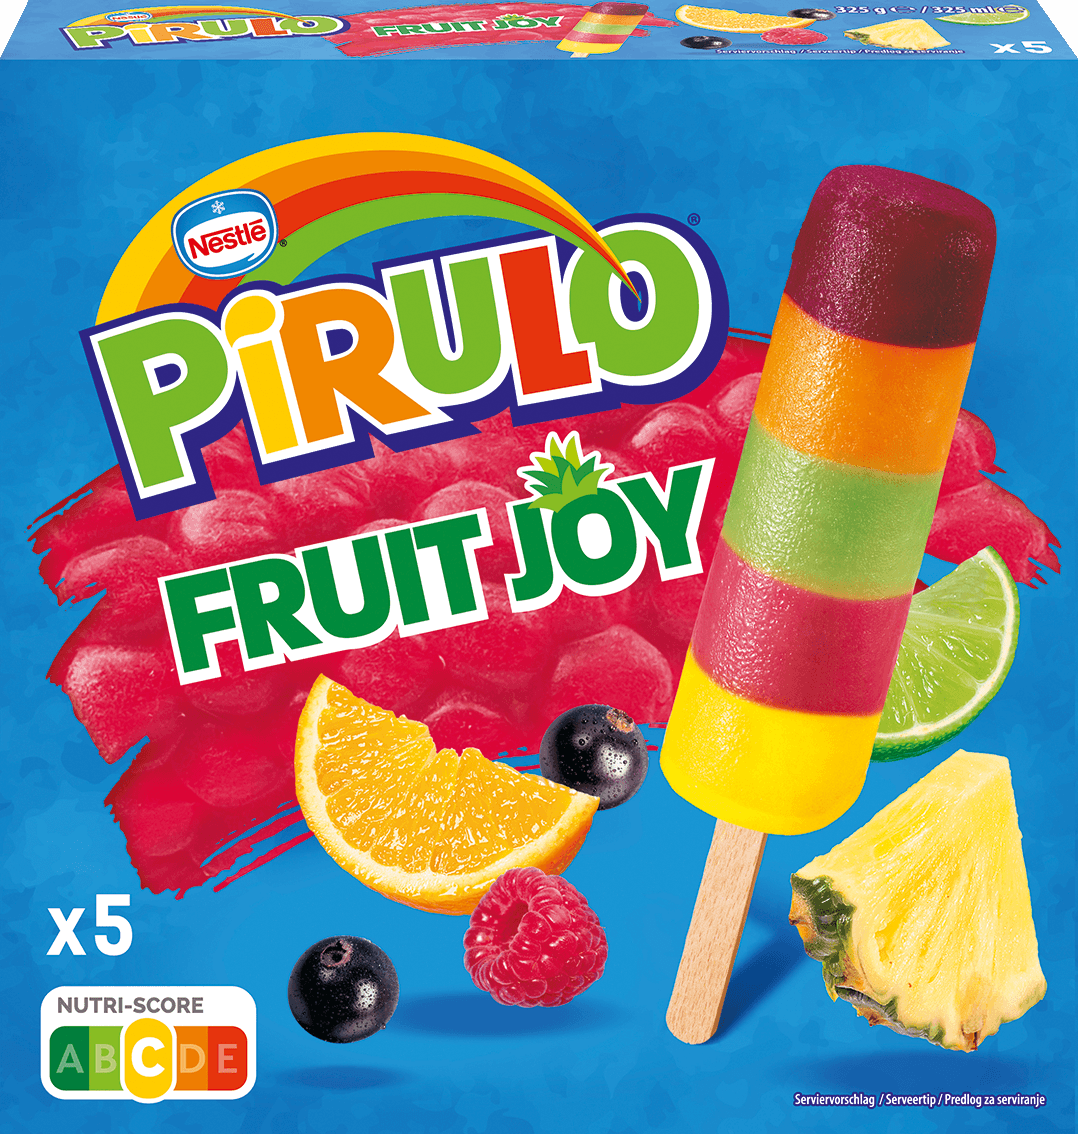 Pirulo Fruit Joy